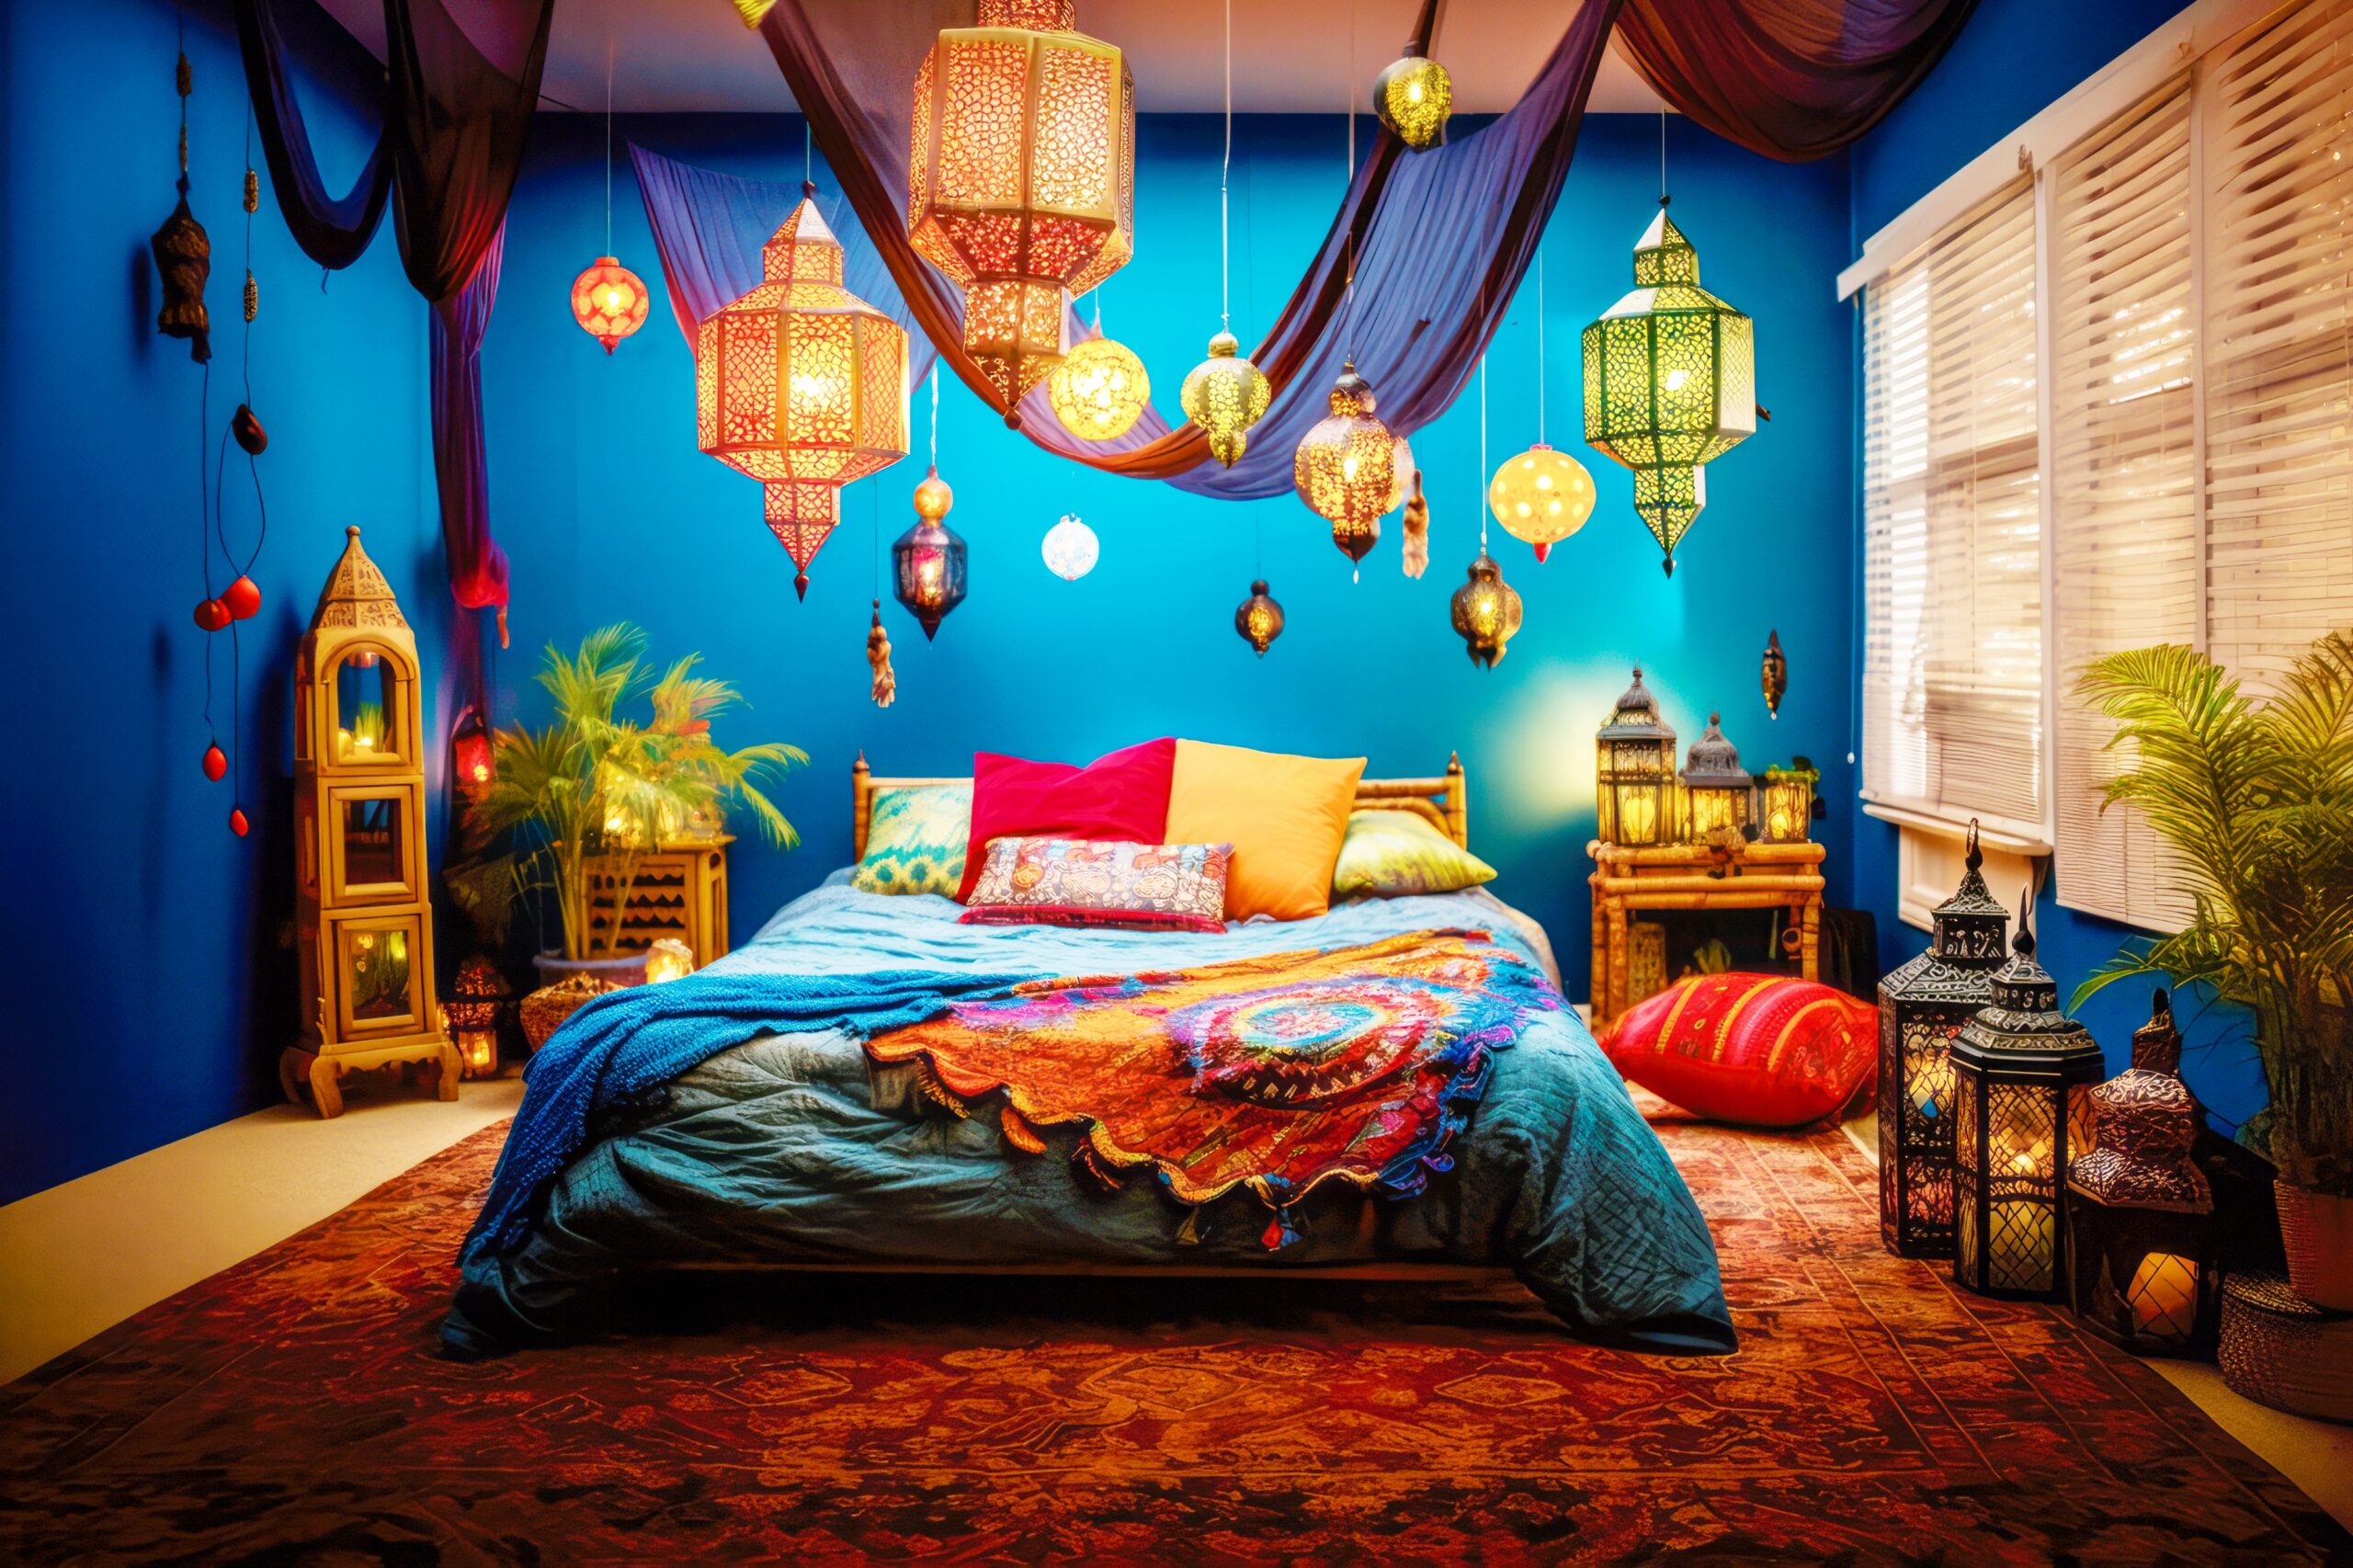 <img src="blue cozy.jpg" alt="blue cozy autumn bedroom morrocan"/>